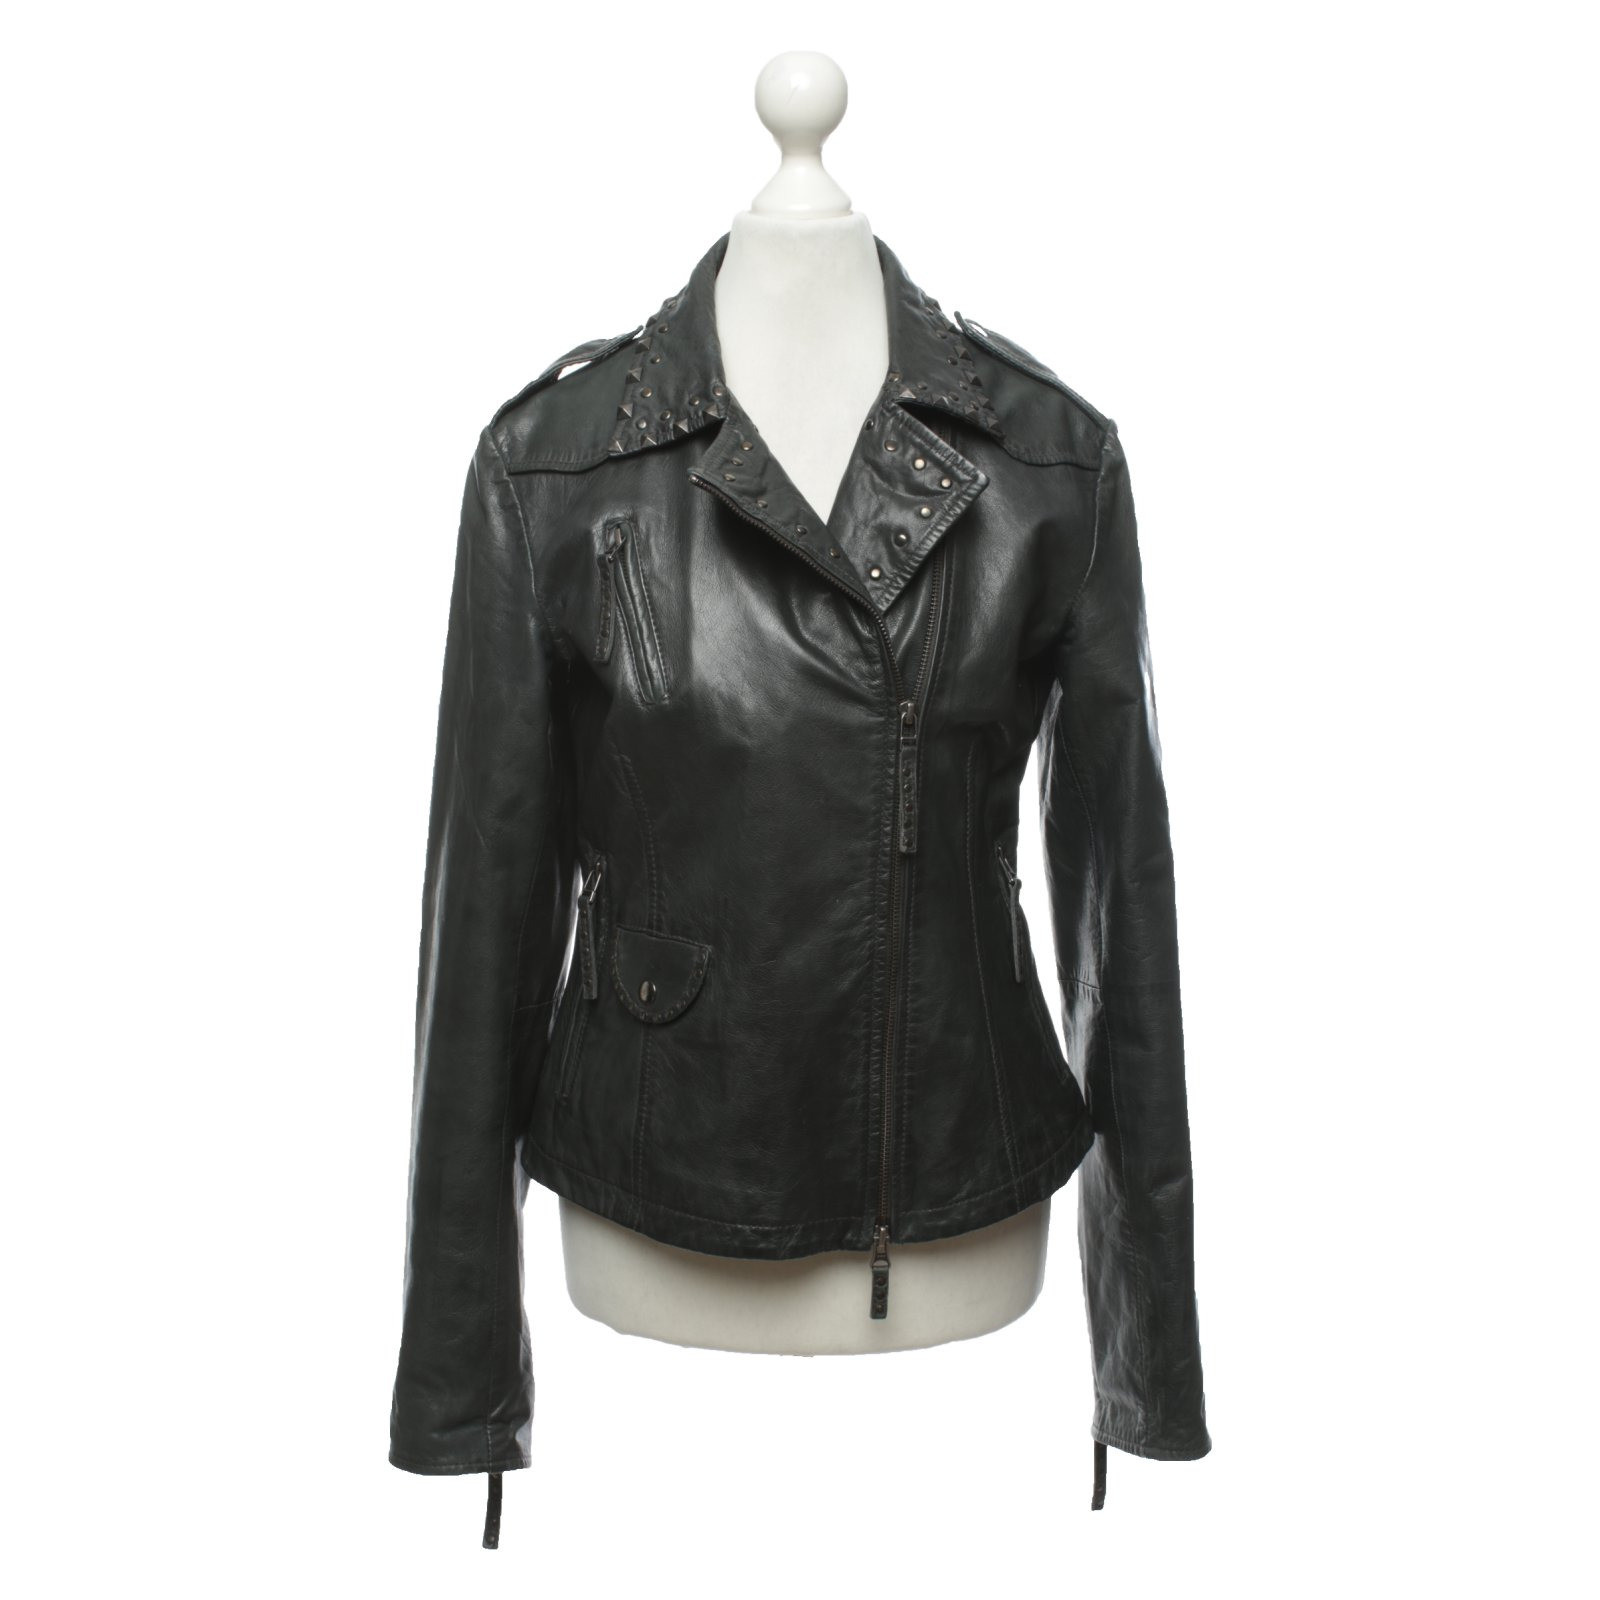 BLAUMAX Women's Jacke/Mantel aus Leder in Grün Size: M